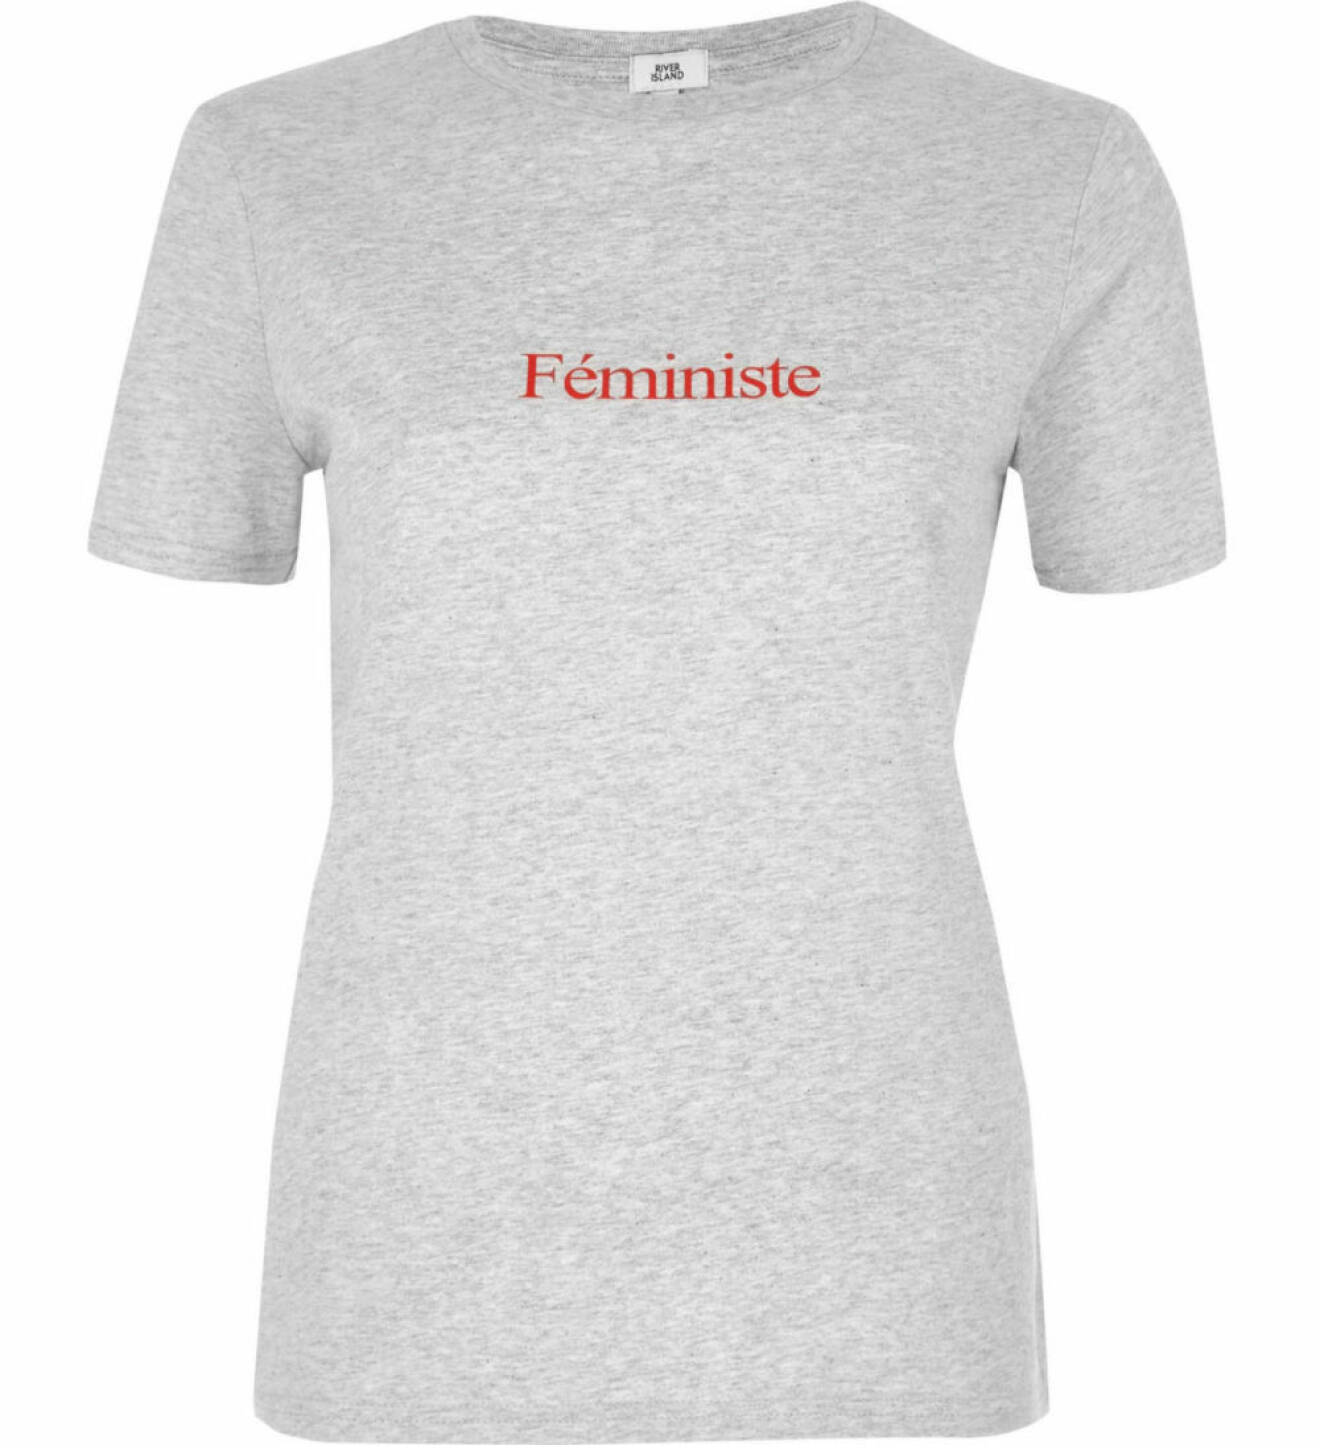 t-shirt feminist tryck